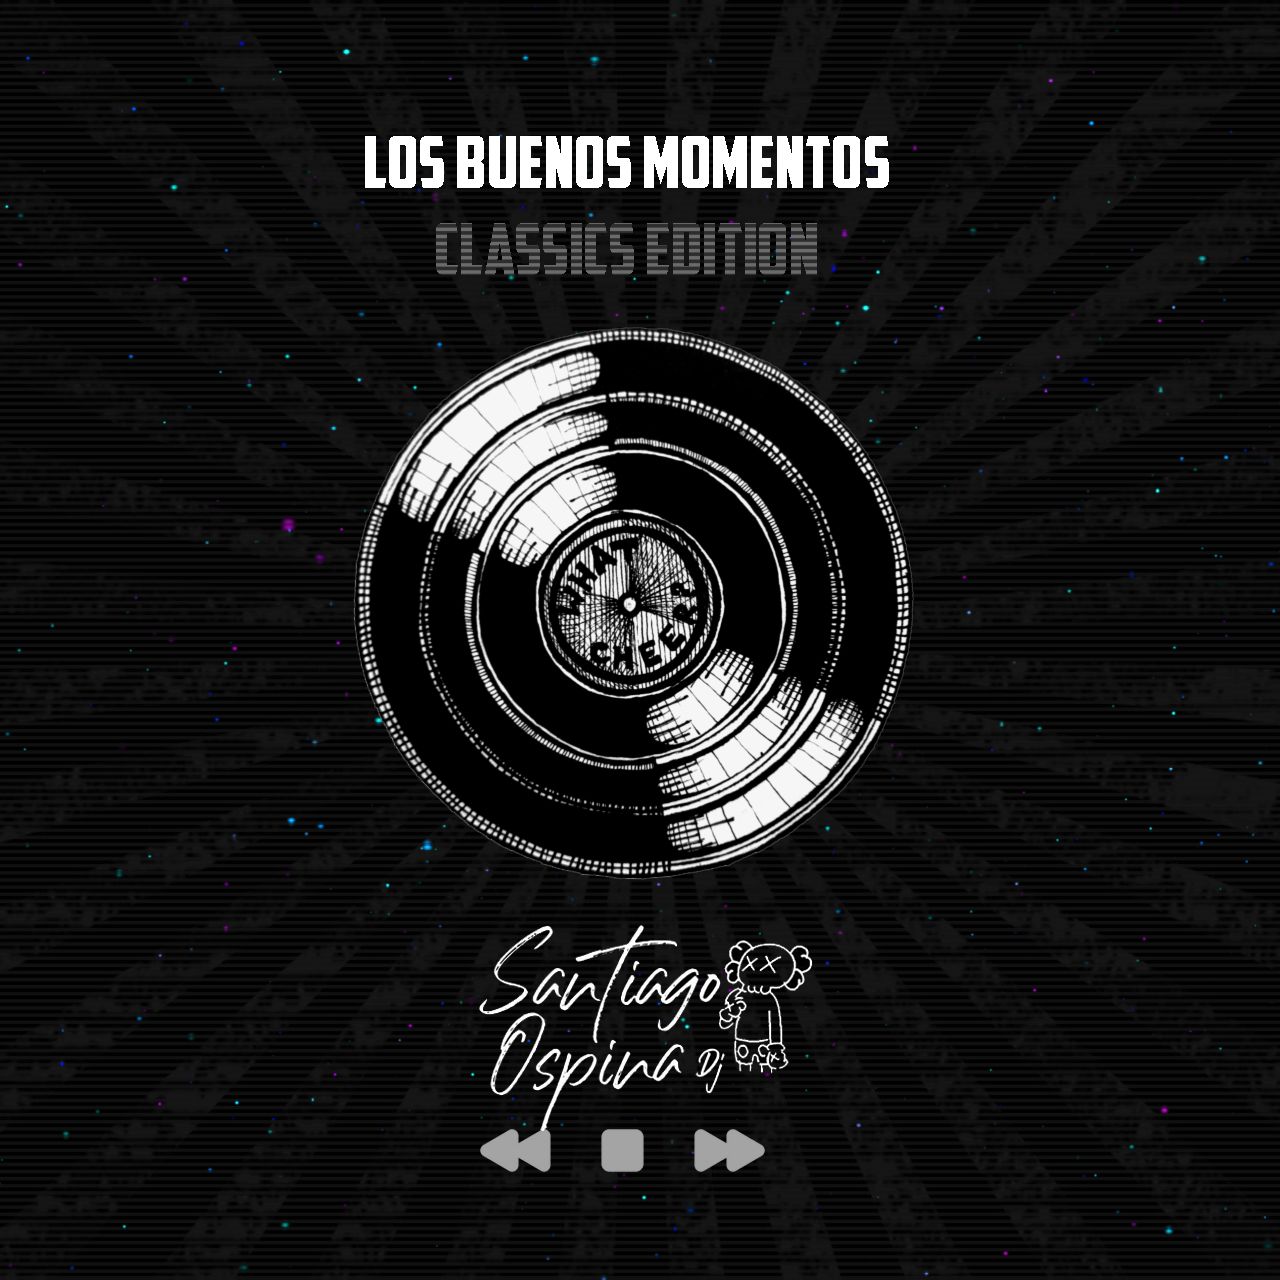 Hent LOS BUENOS MOMENTOS - SANTIAGO OSPINA DJ